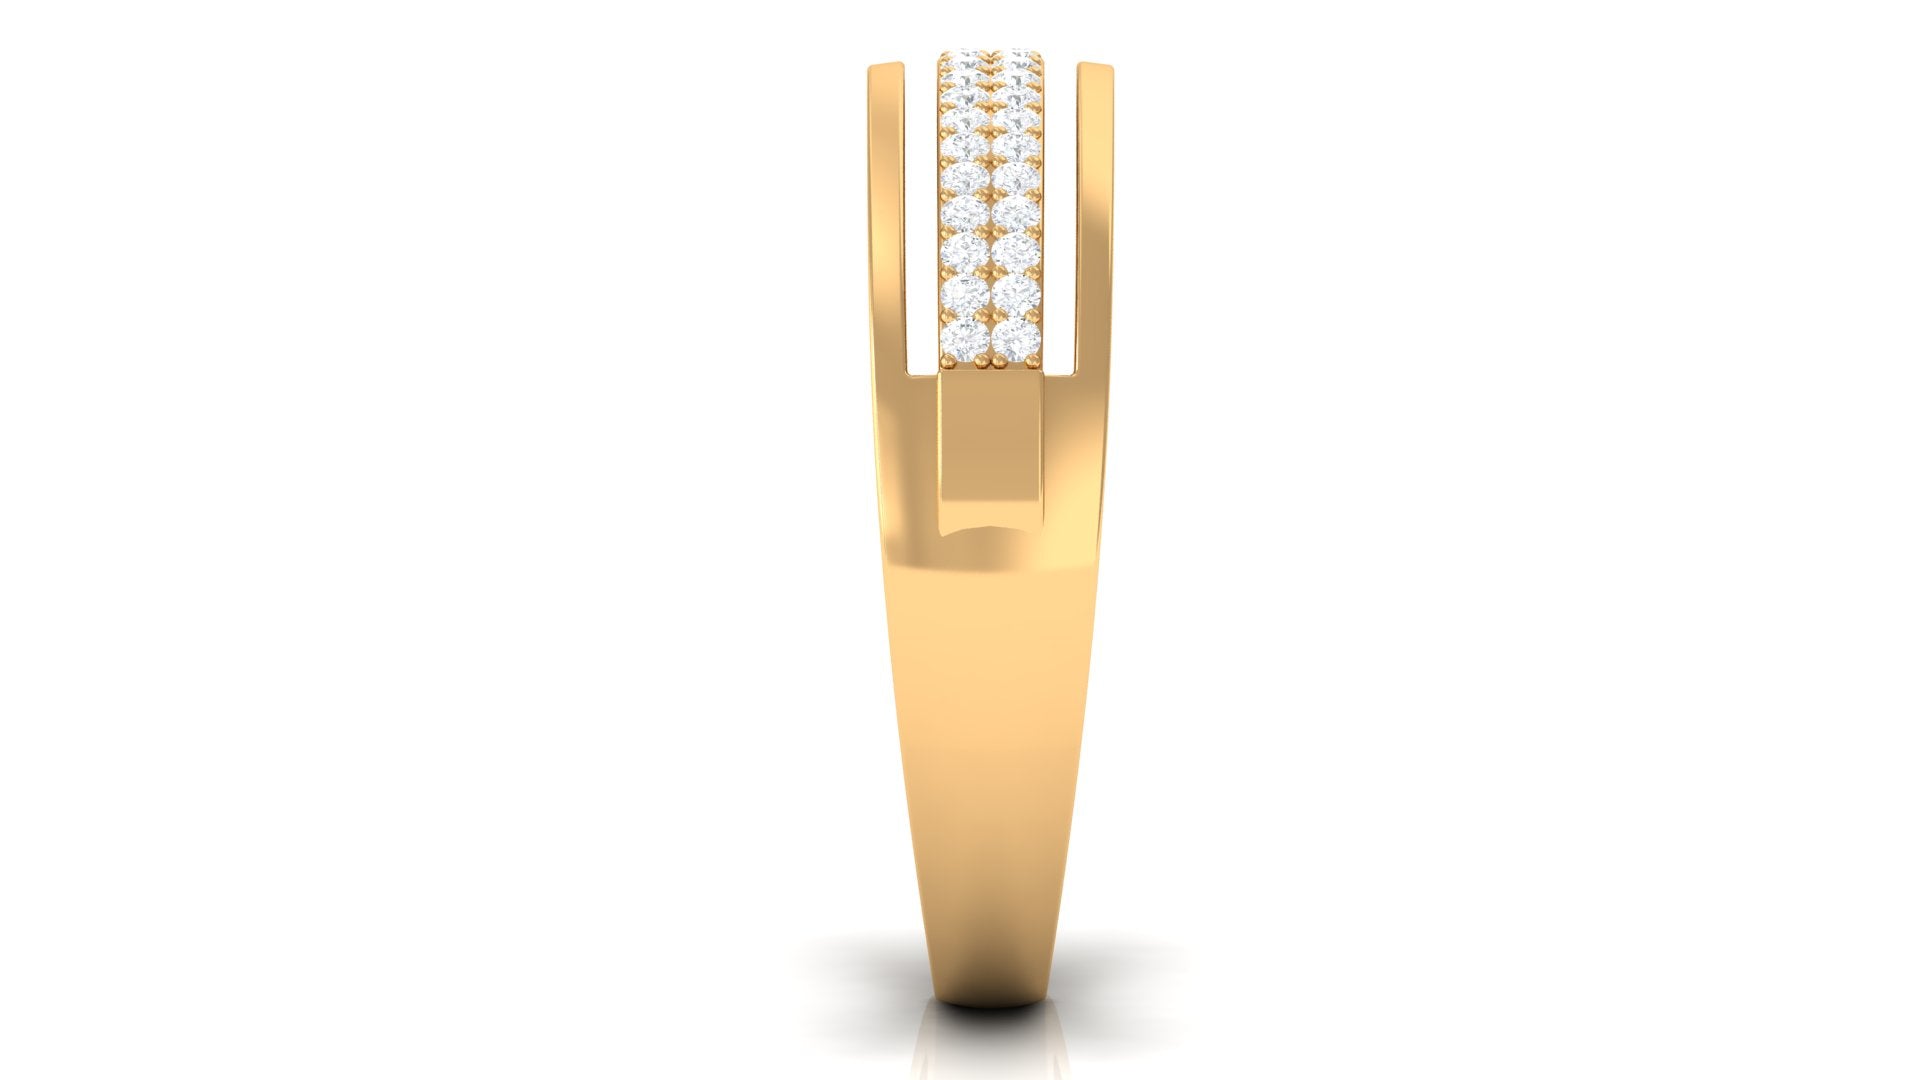 Rosec Jewels-Natural Diamond Unique Half Eternity Gold Band Ring